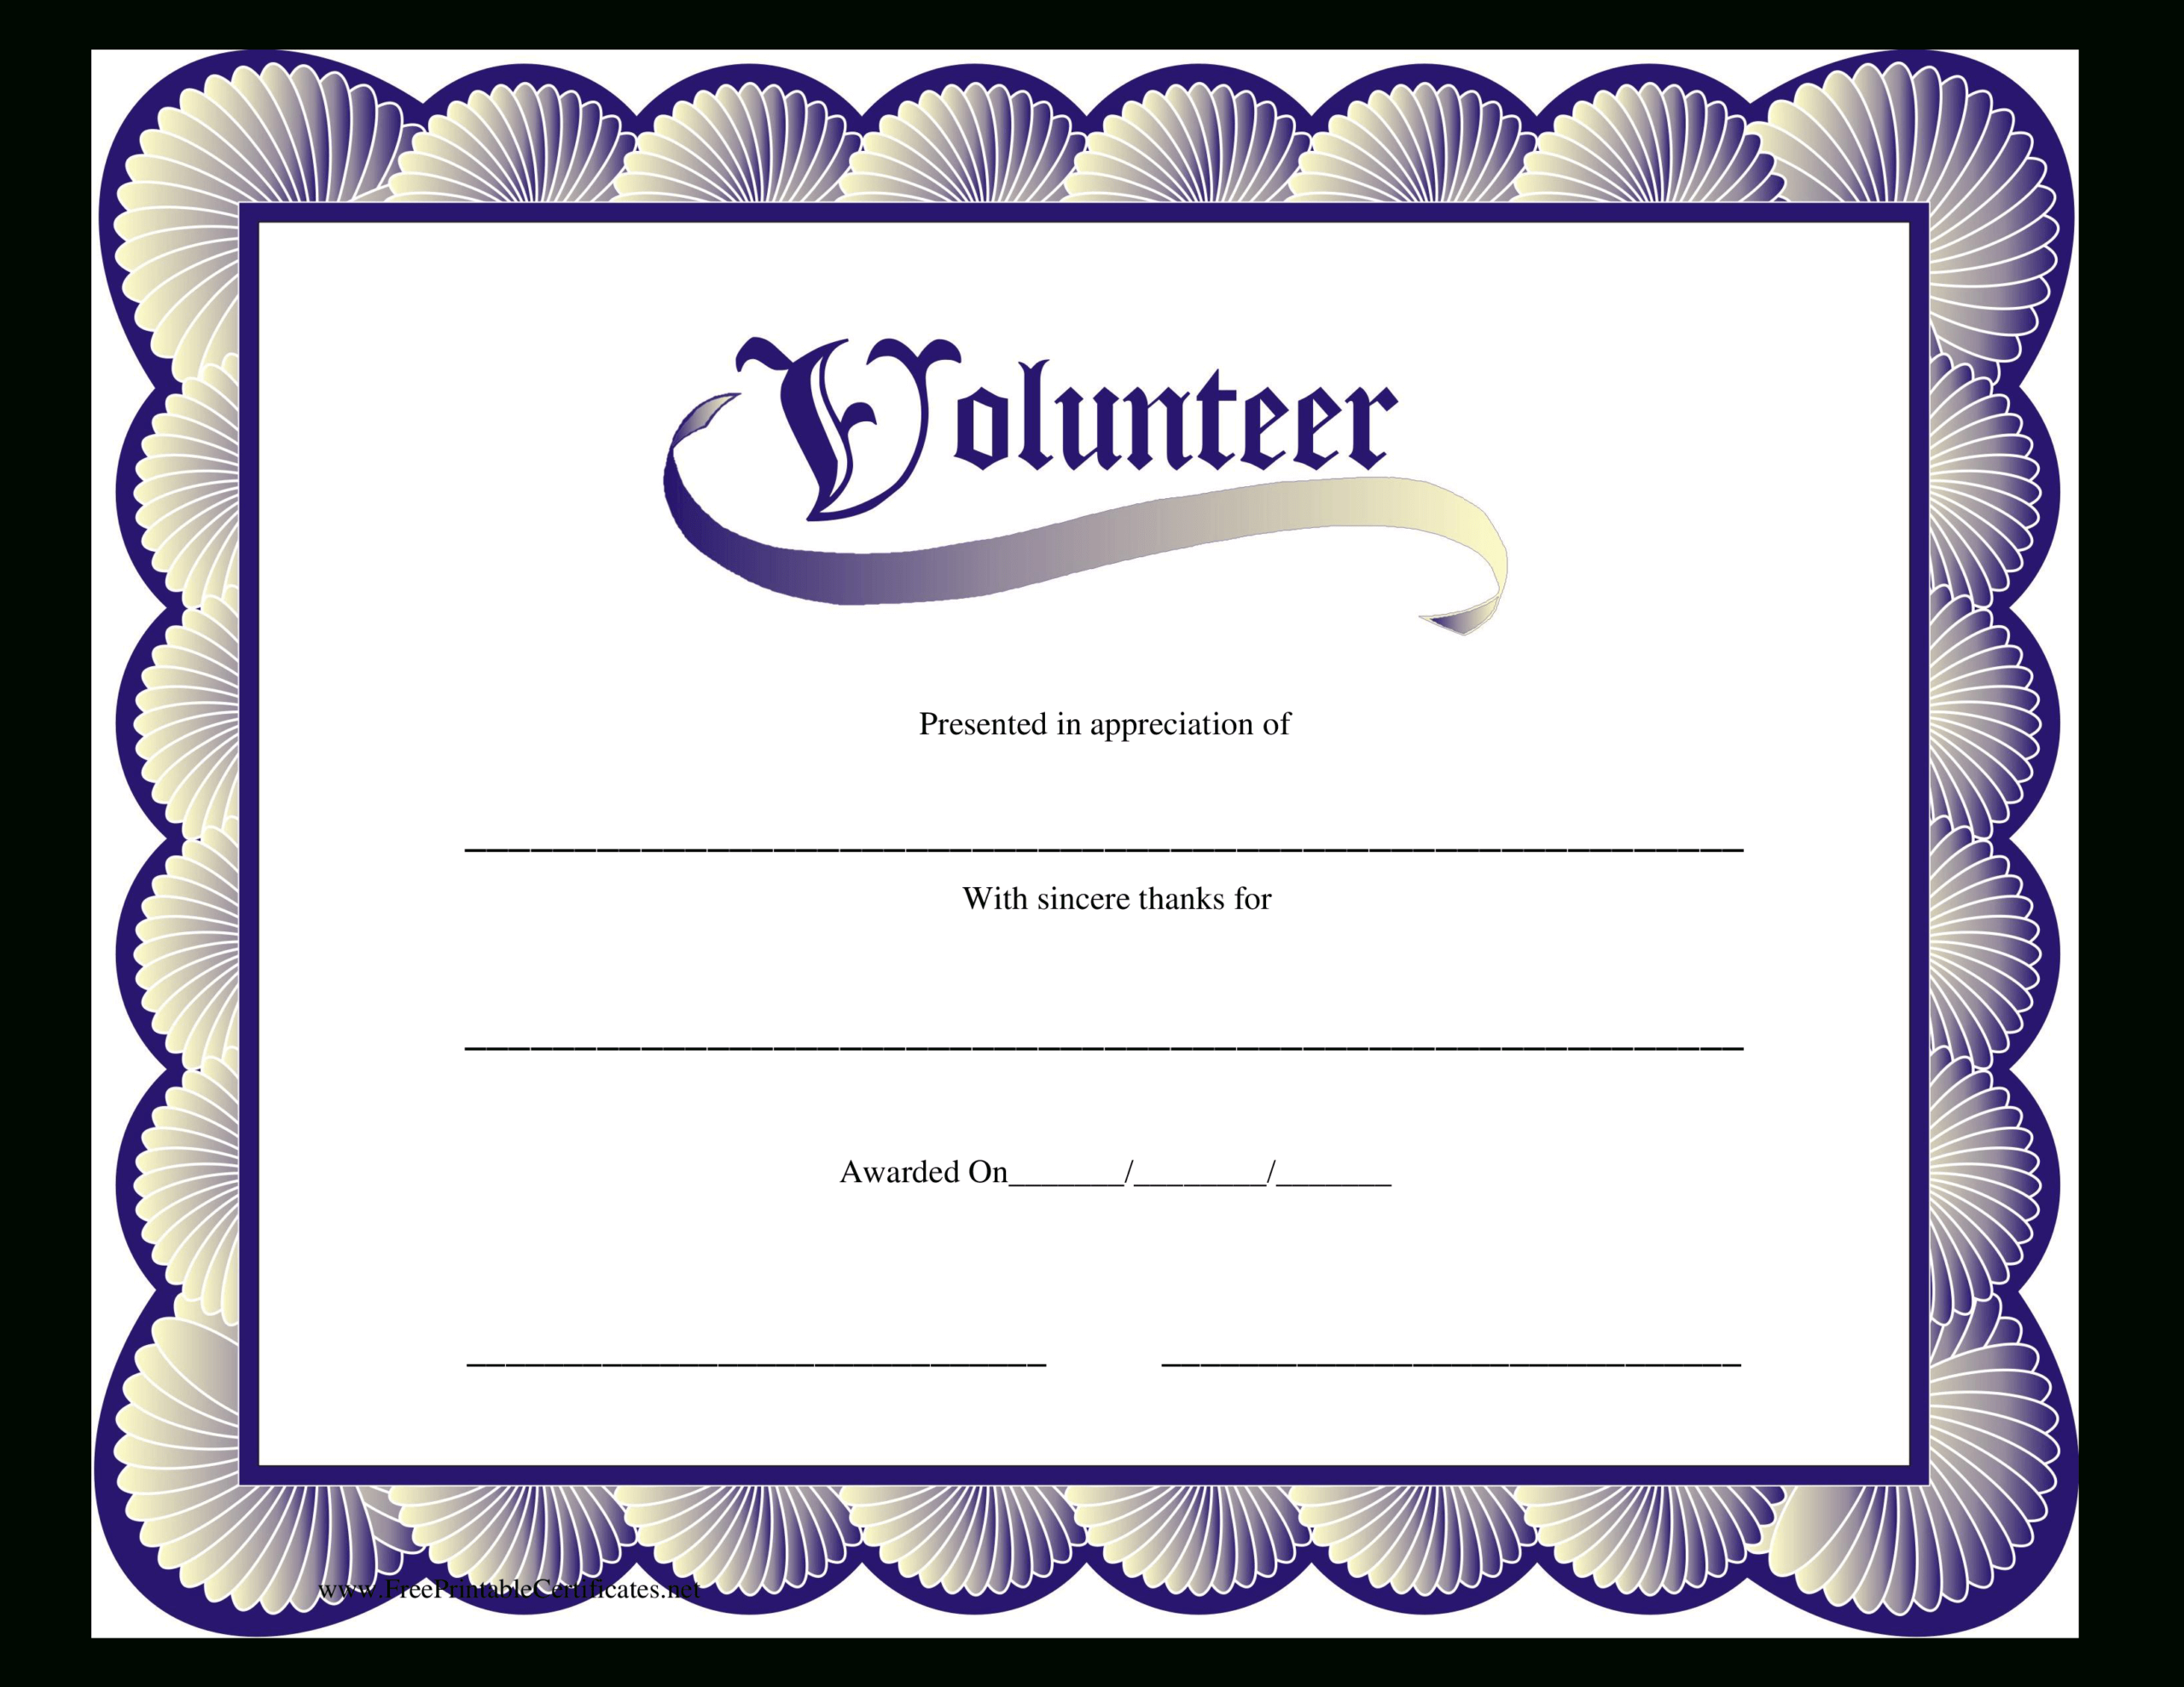 Volunteer Certificate | Templates At Allbusinesstemplates Inside Volunteer Certificate Templates